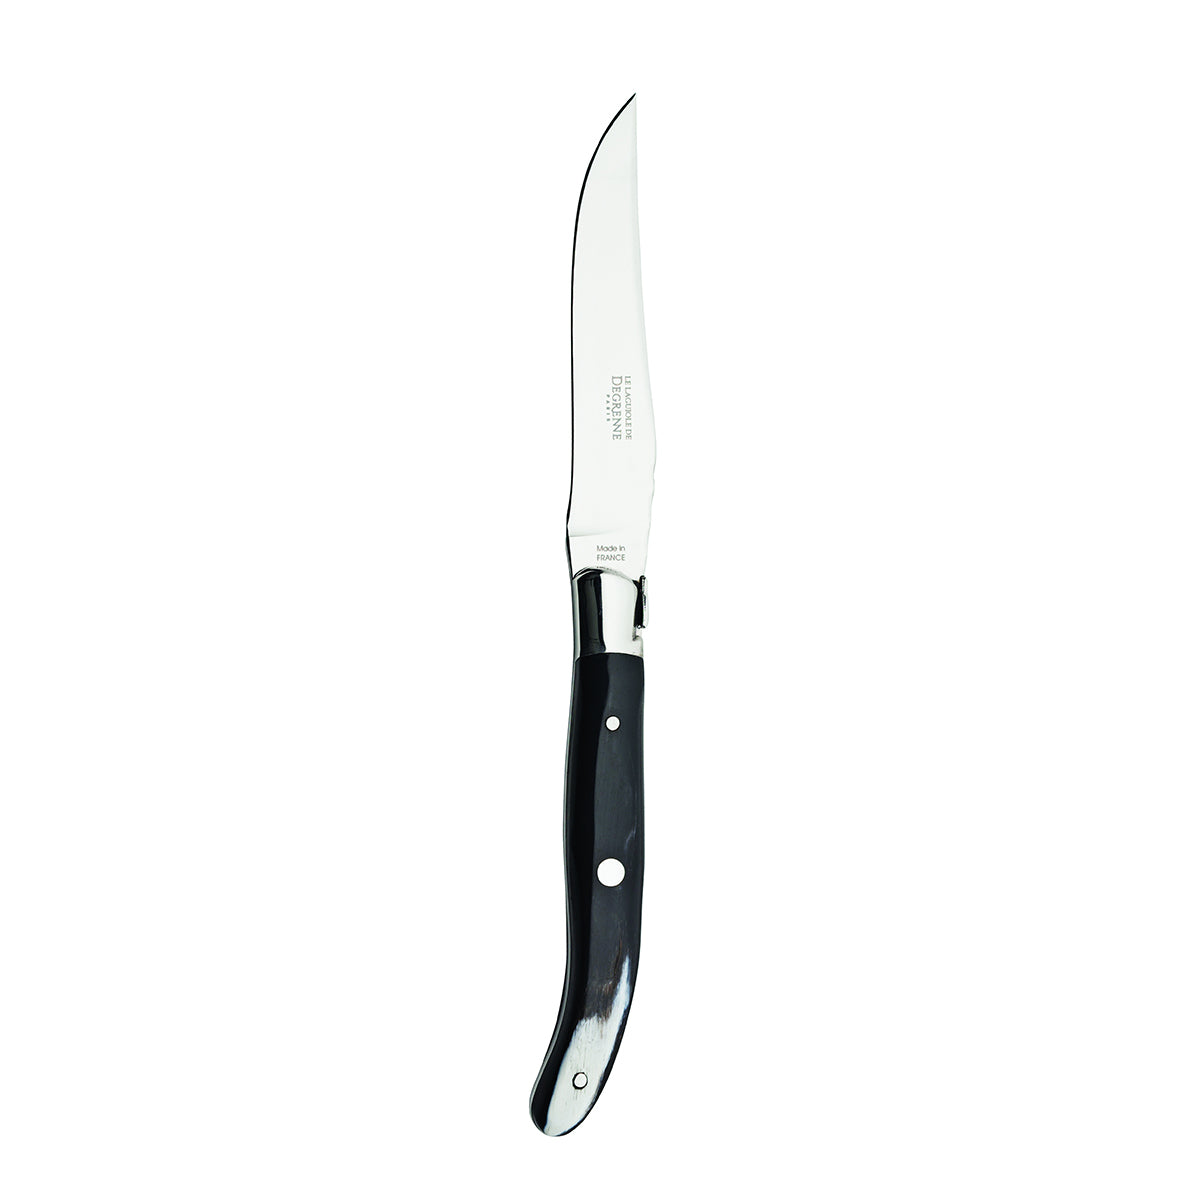 Eleganza Corsa Steak Knives - Horn Tip - Set of 6 - Laguiole Imports